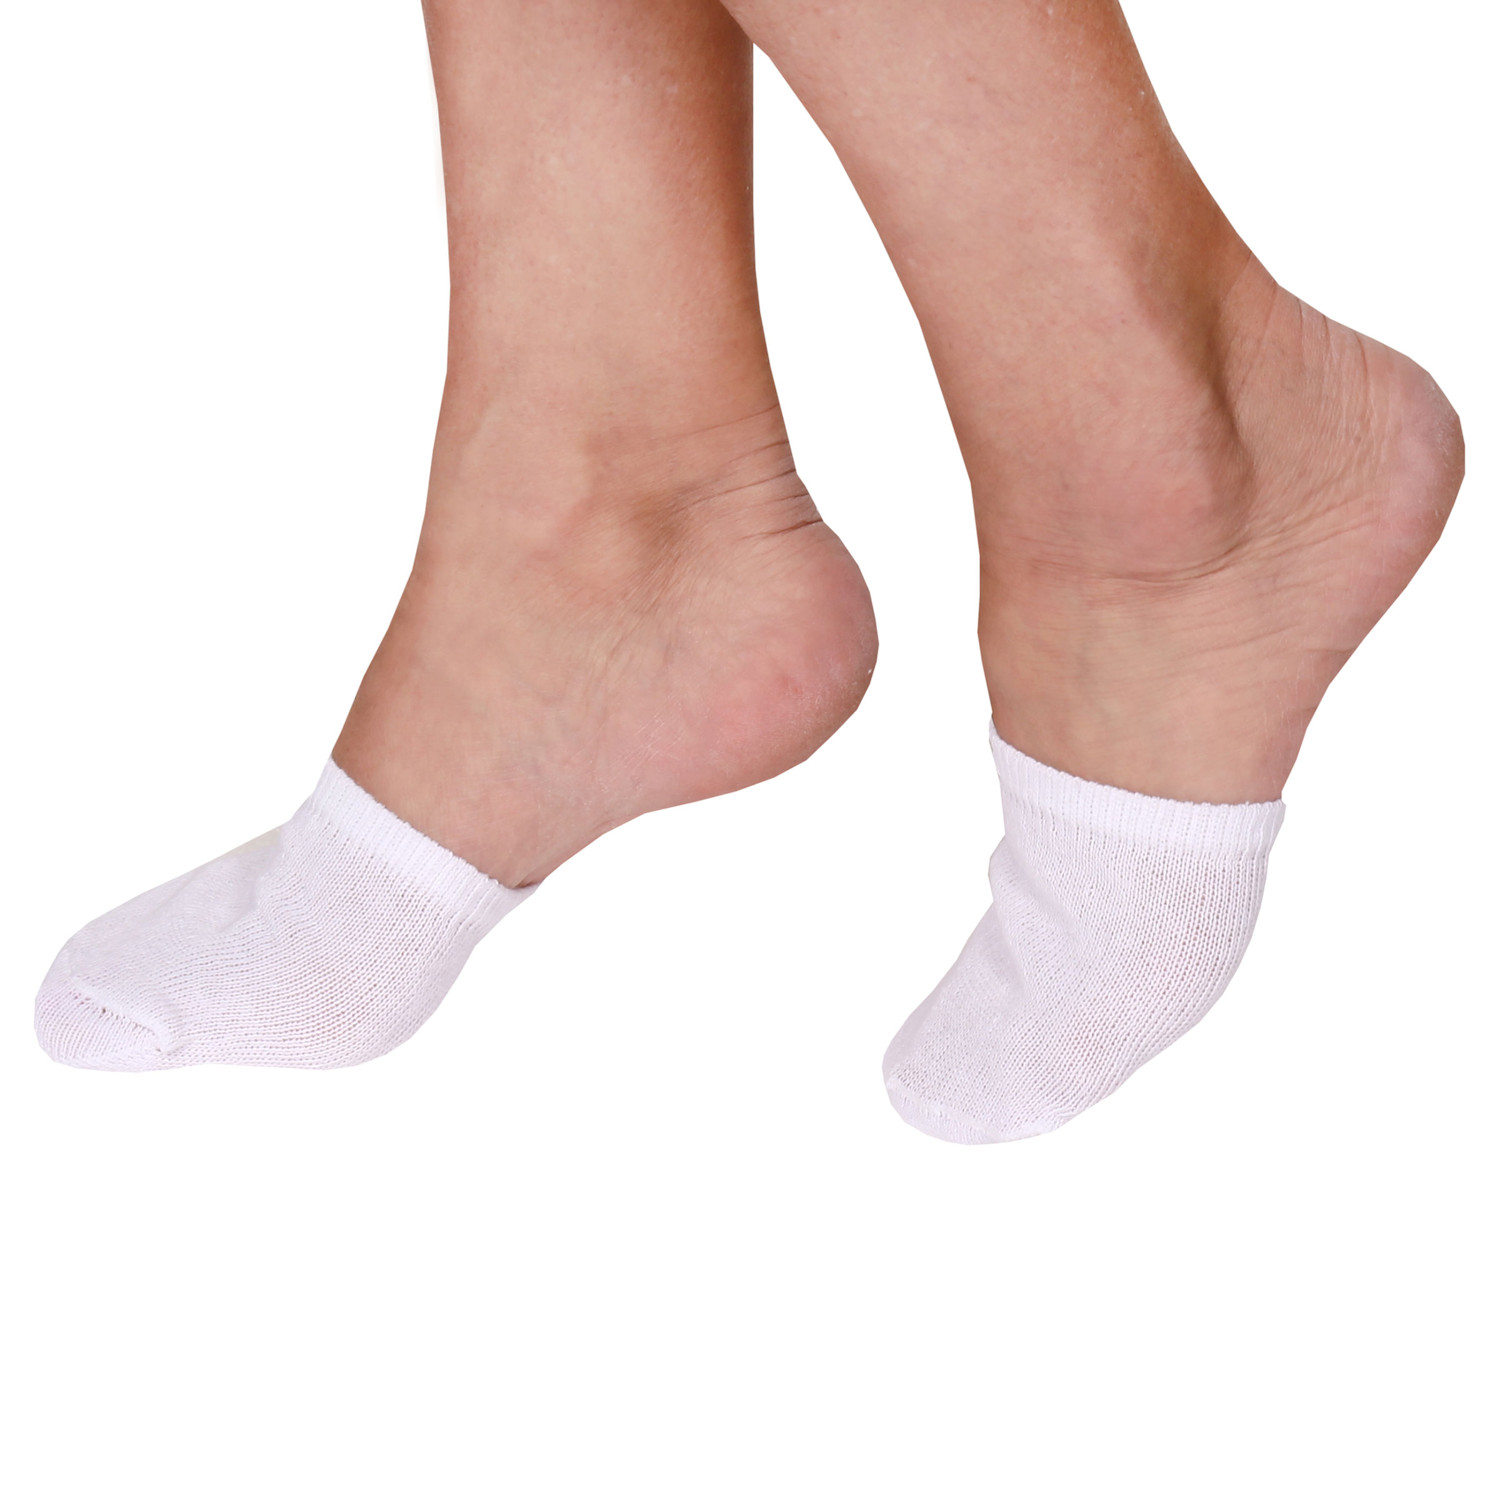 Ladies Toe Covers - Set of 3